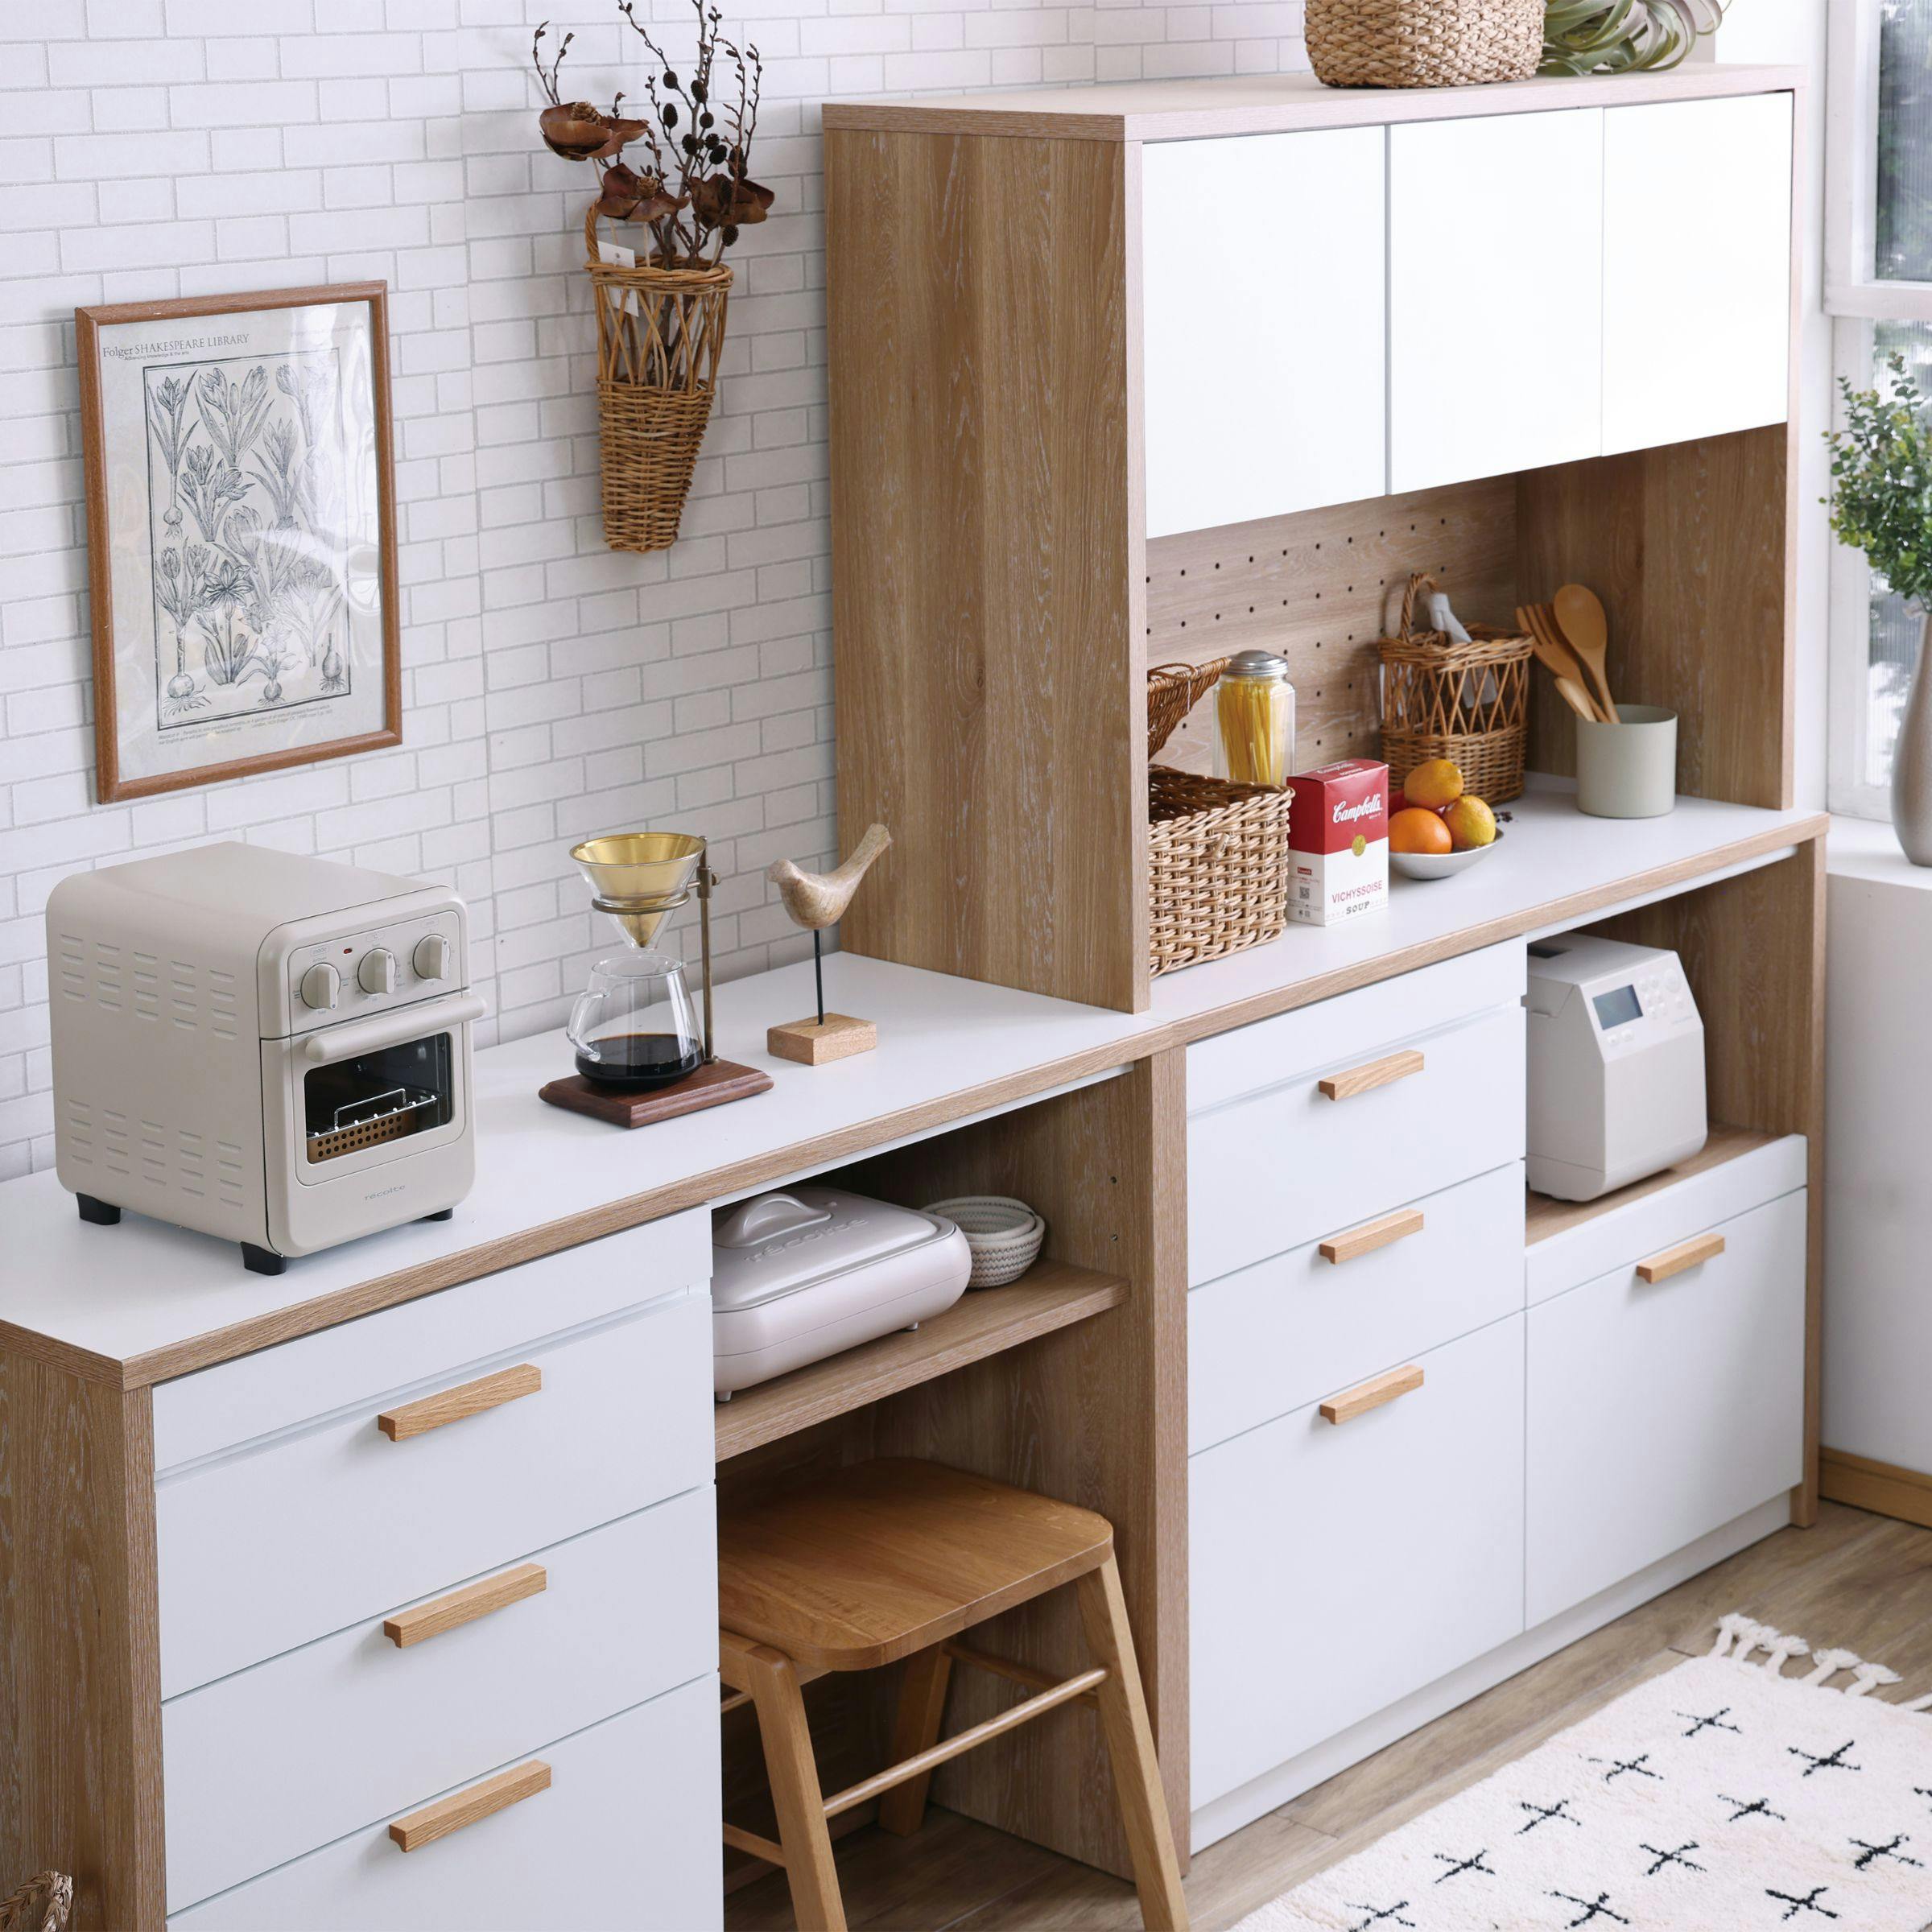 S177 古賀家具 キッチンカウンター、キッチンボード、幅119cm、美品 